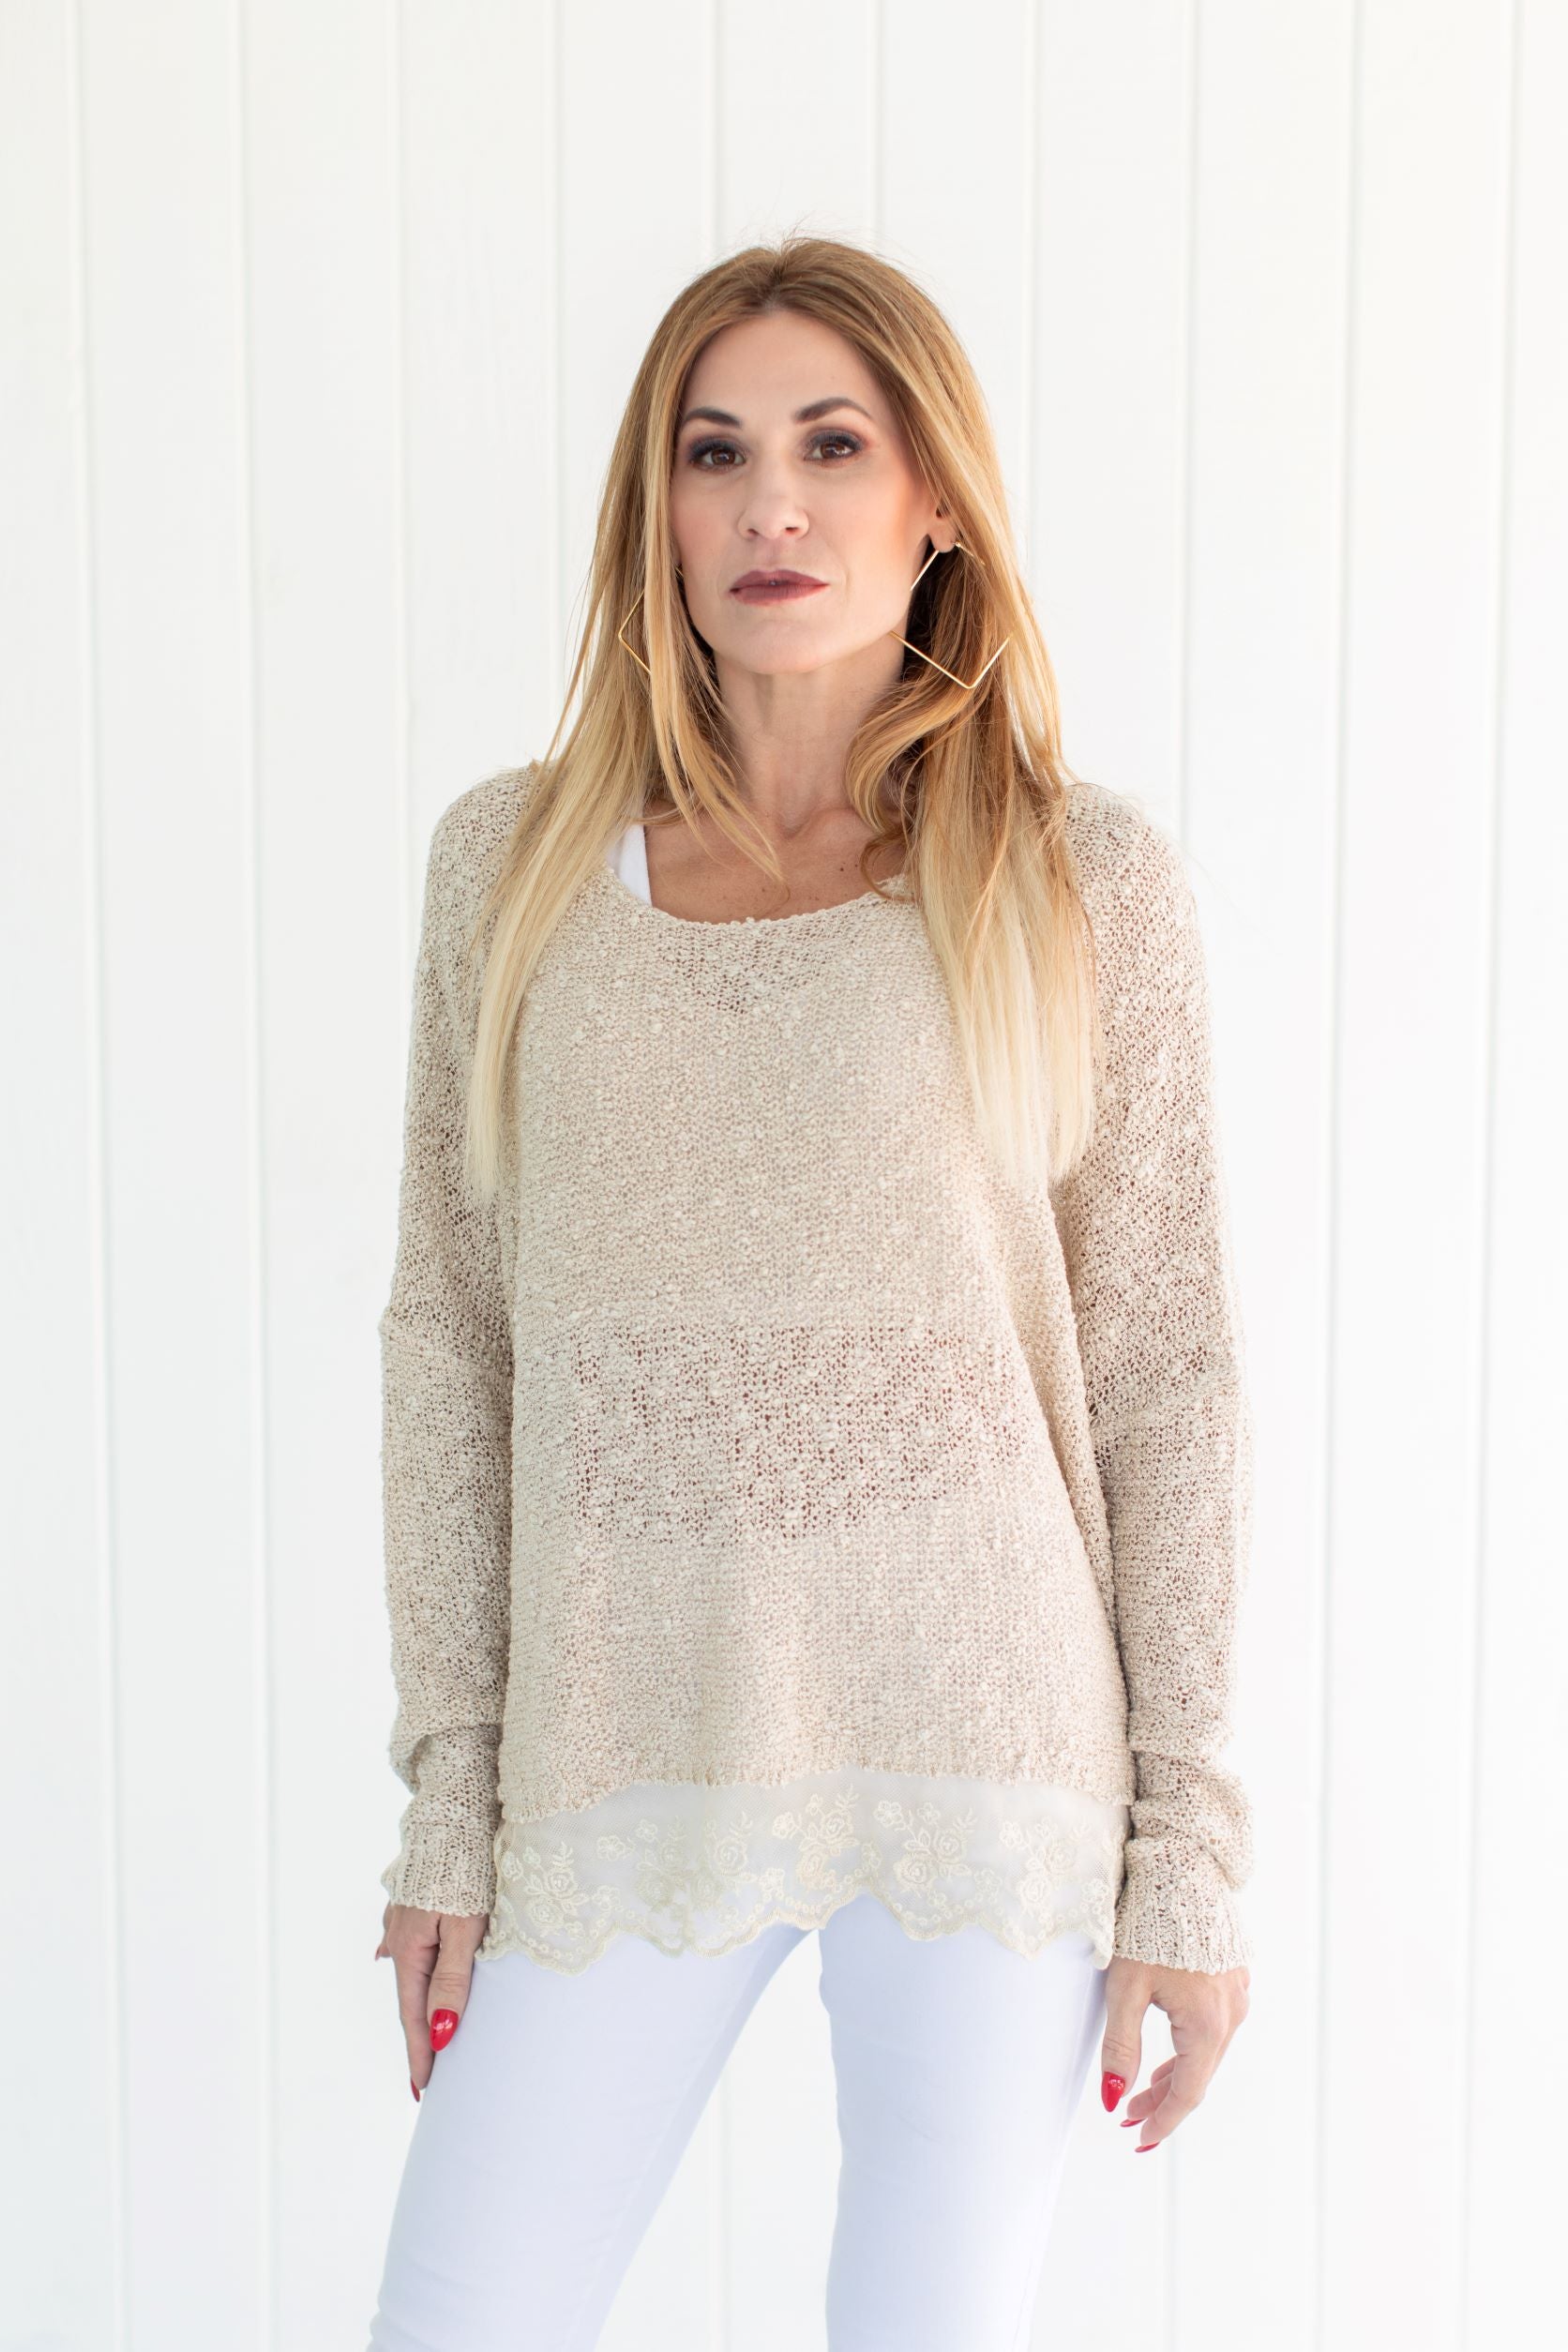 Lace Sweater Cream Tops jeanpierreklifa.com   